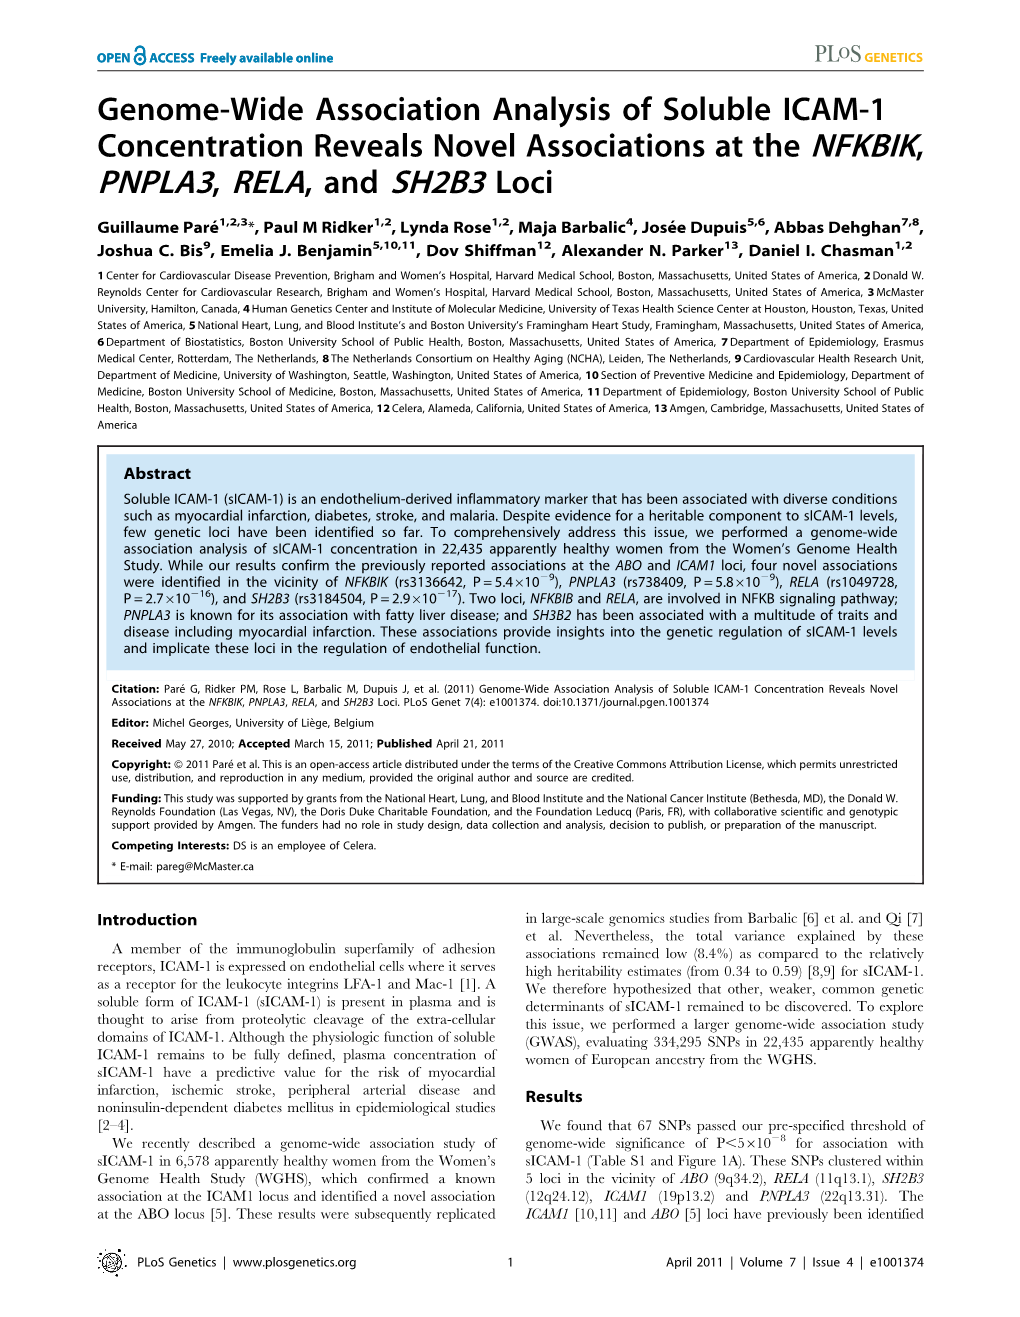 PNPLA3, RELA, and SH2B3 Loci